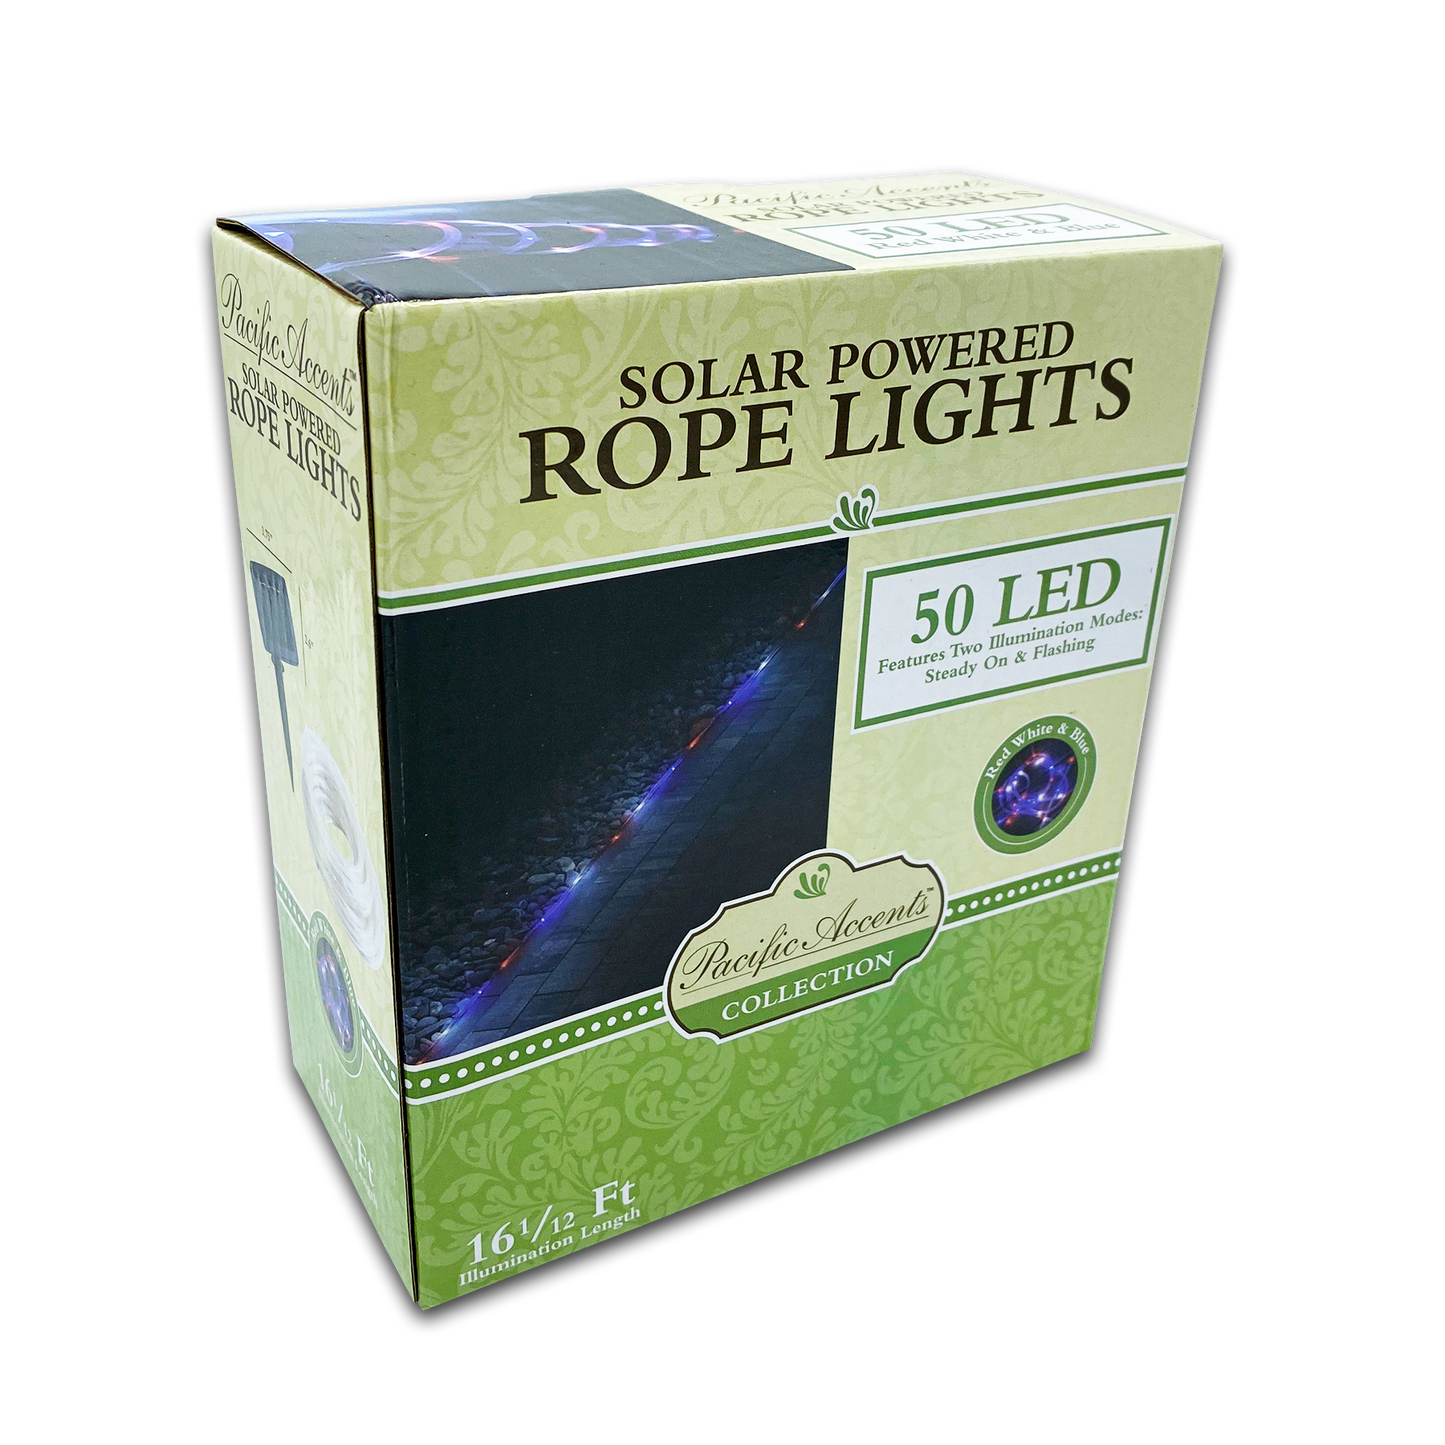 SOLAR POWERED ROPE LIGHTS